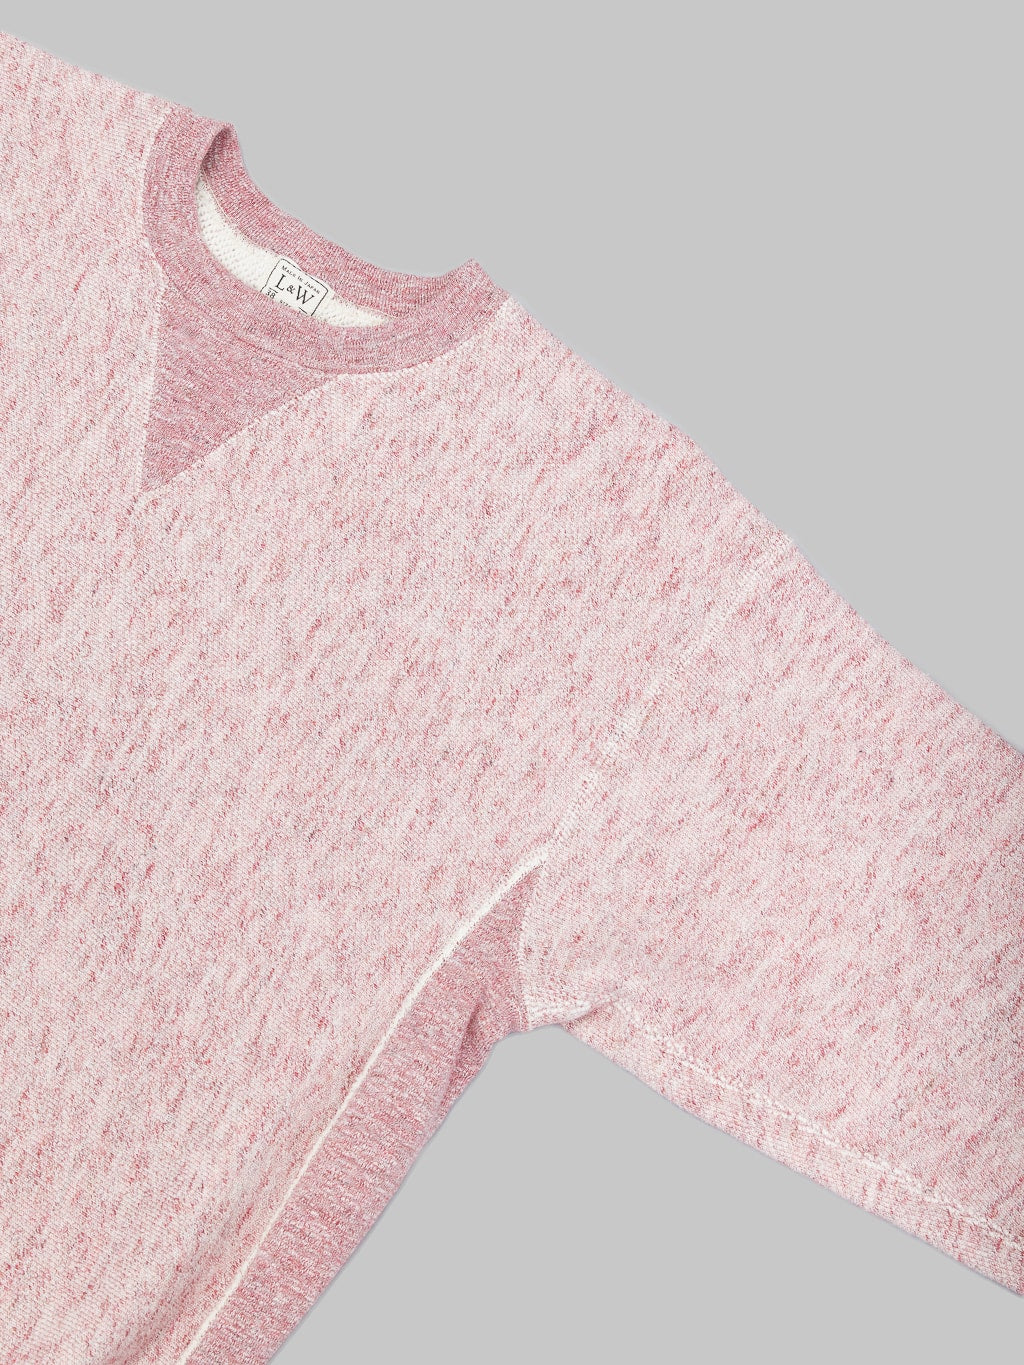 loop and weft big loopback fleece side panel sweatshirt cherry sleeve